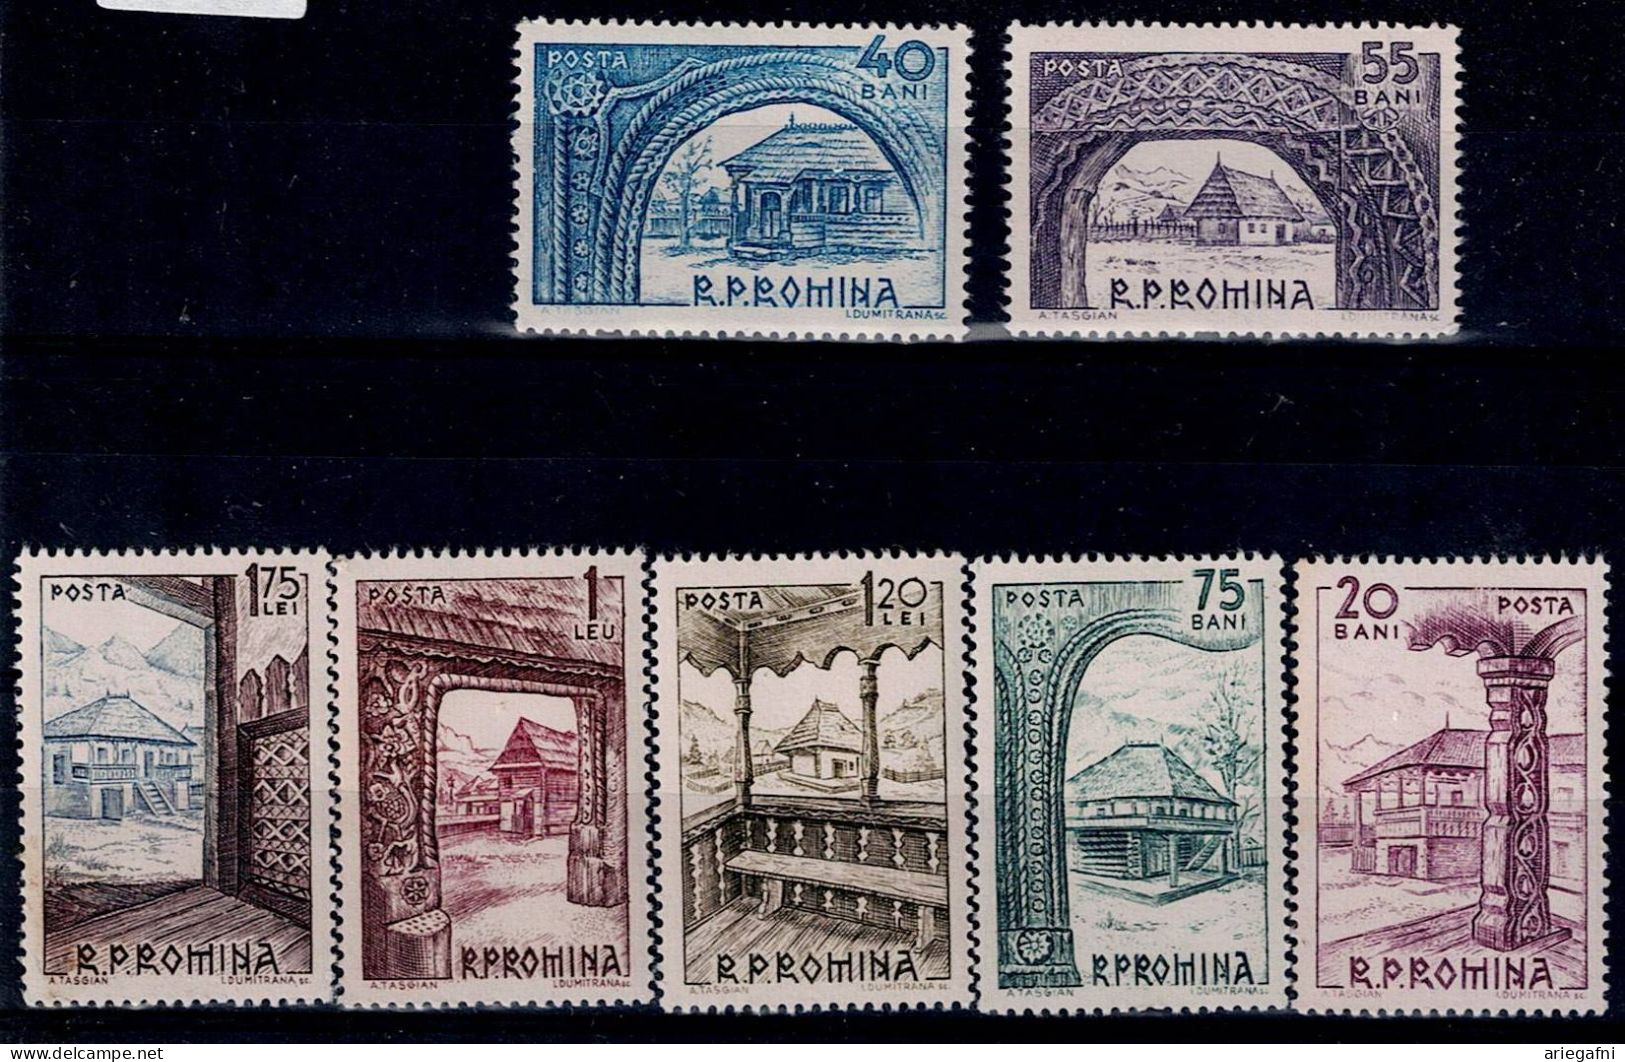 ROMANIA 1963 OPEN-AIR MUSEUM OF OLD FARMHOUSES MI No 2222-8 MNH VF!! - Nuovi